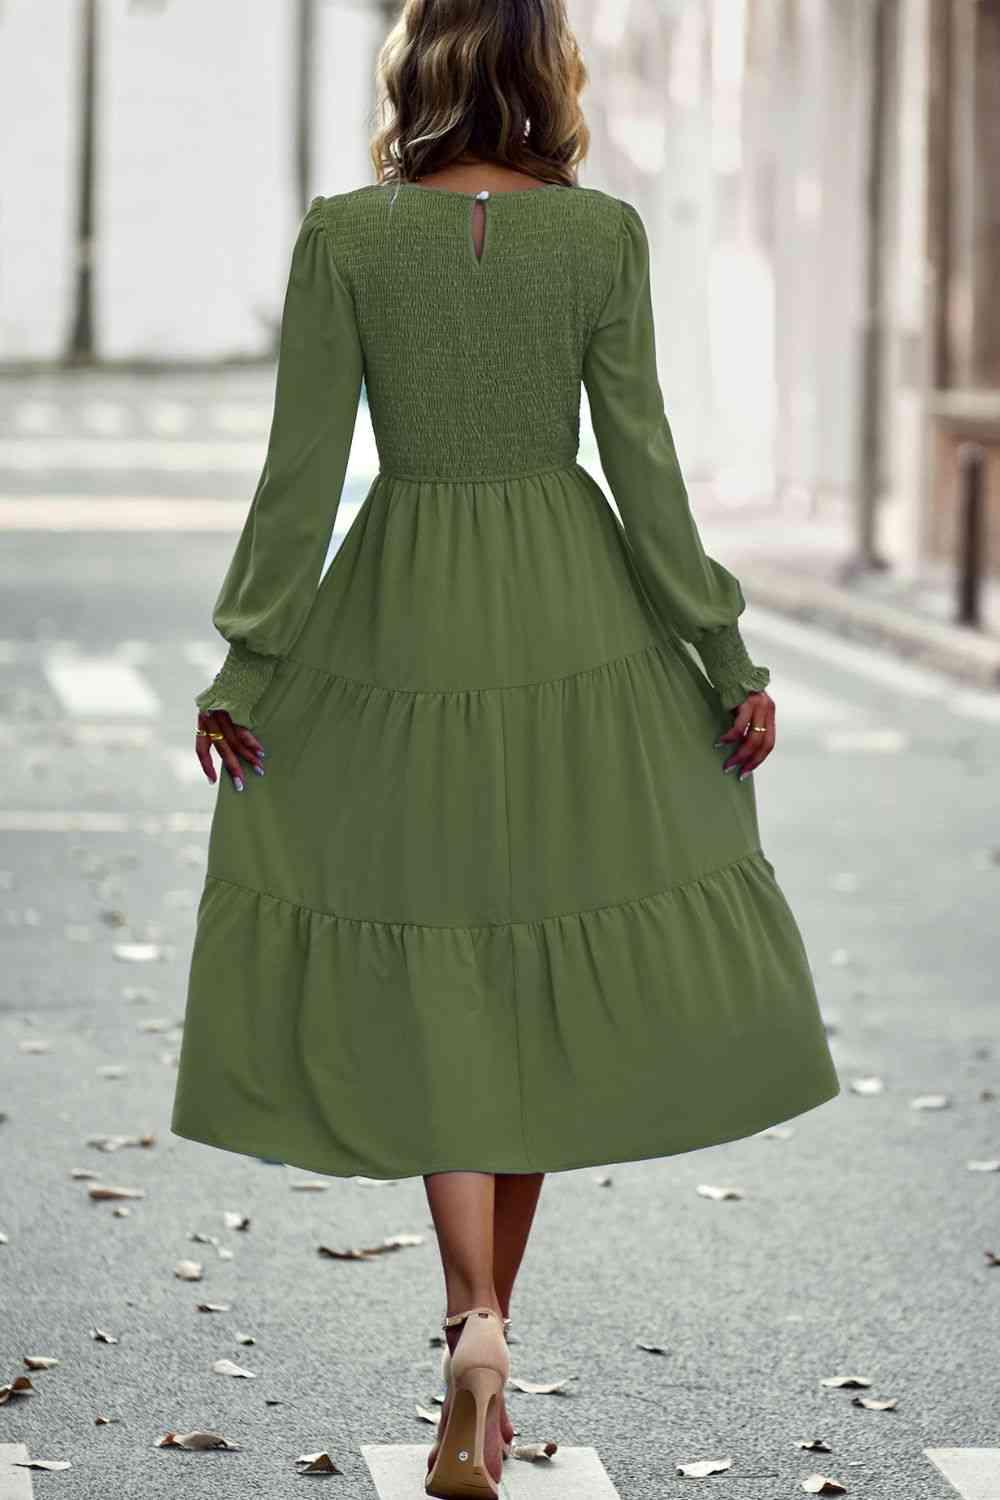 a woman in a green dress is walking down the street